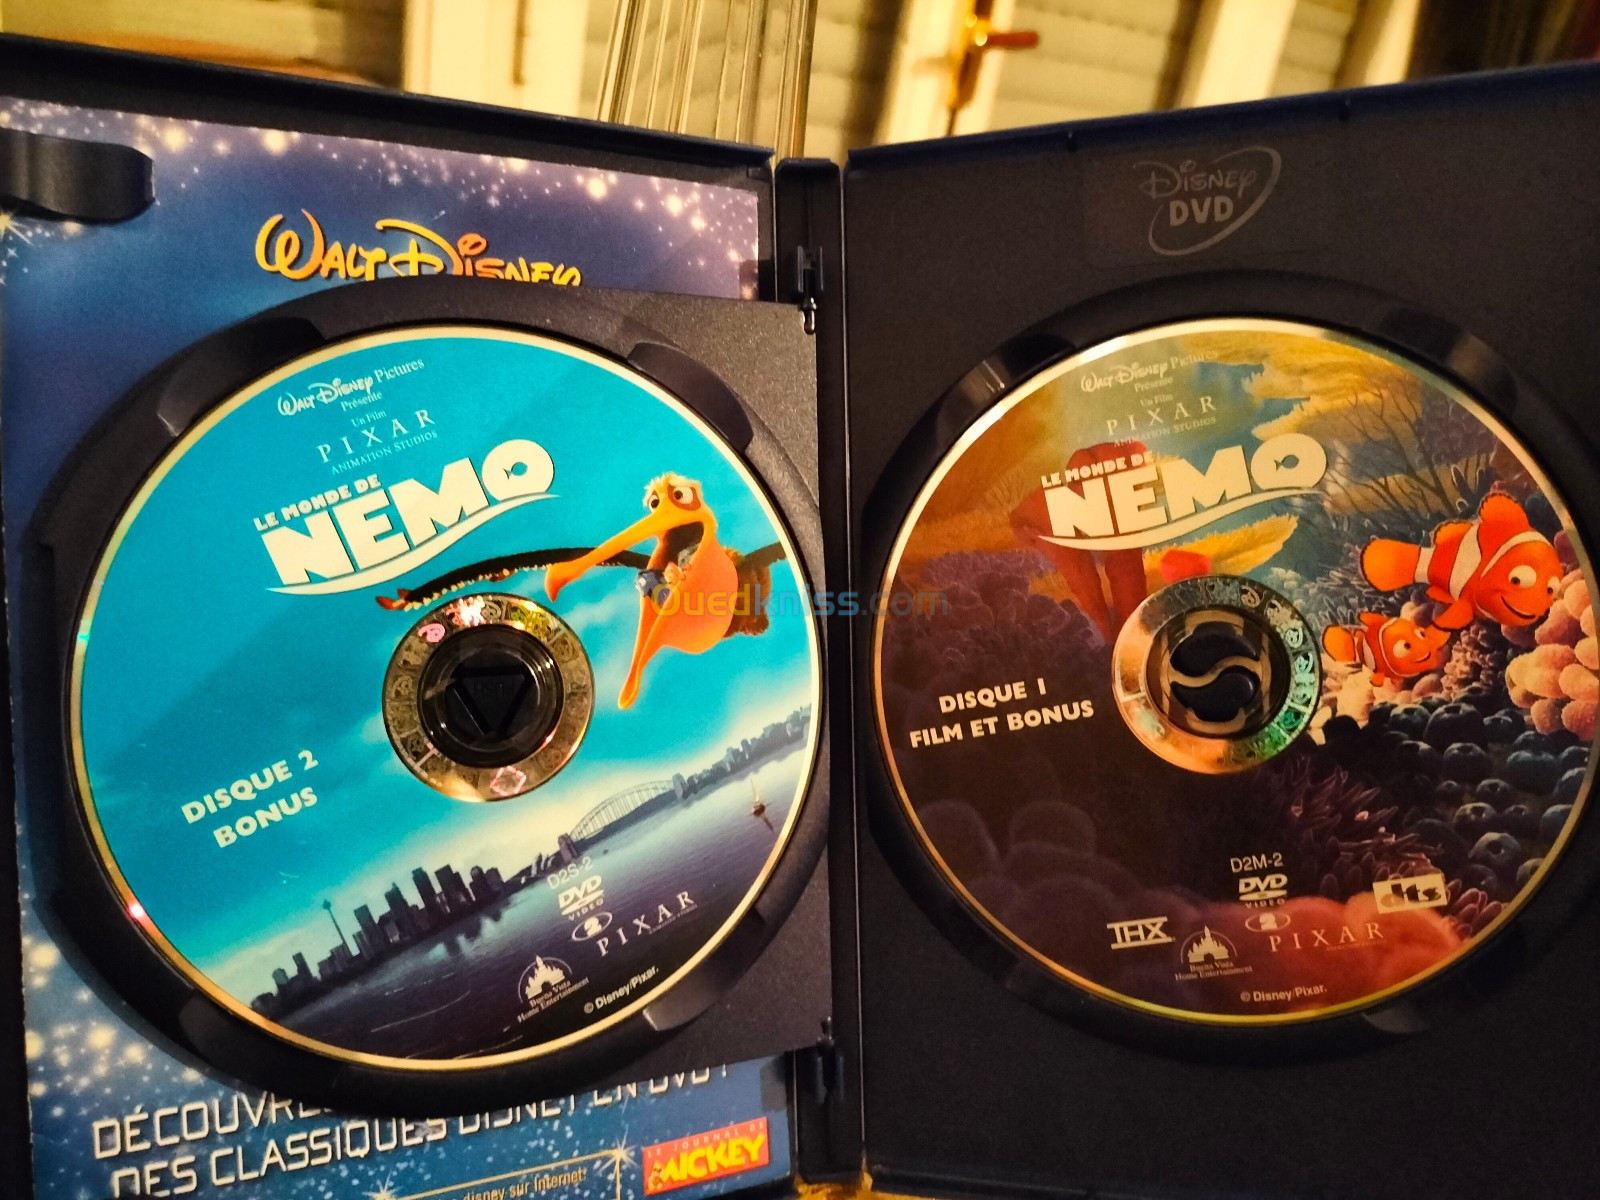 Le Monde de Nemo Film 2003 ‧ 1h 40m